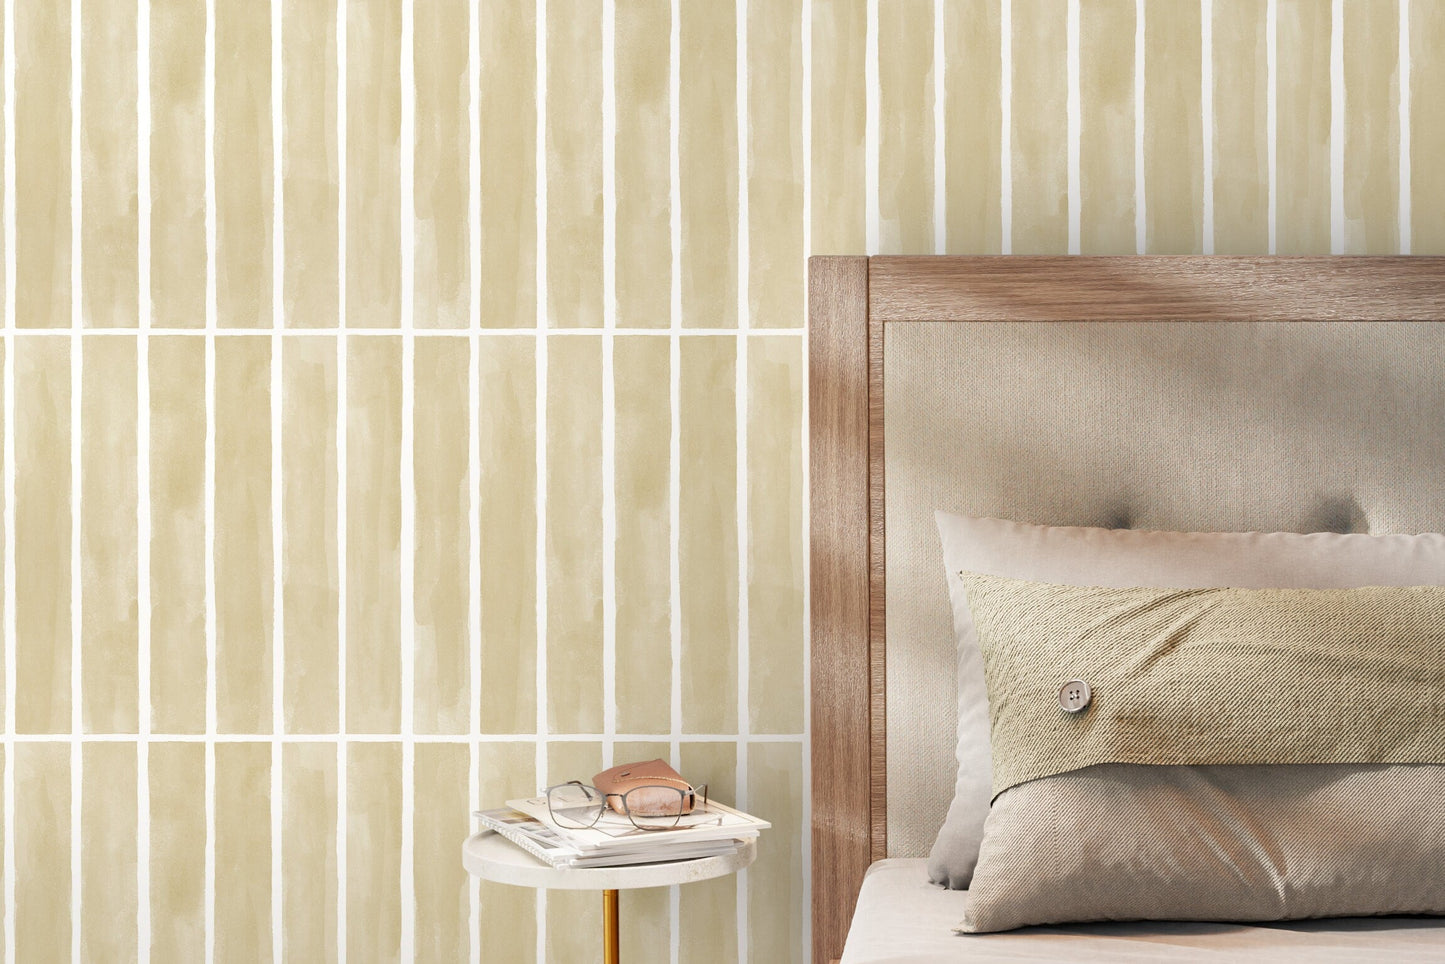 Yellow Modern Striped Wallpaper / Peel and Stick Wallpaper Removable Wallpaper Home Decor Wall Art Wall Decor Room Decor - D324